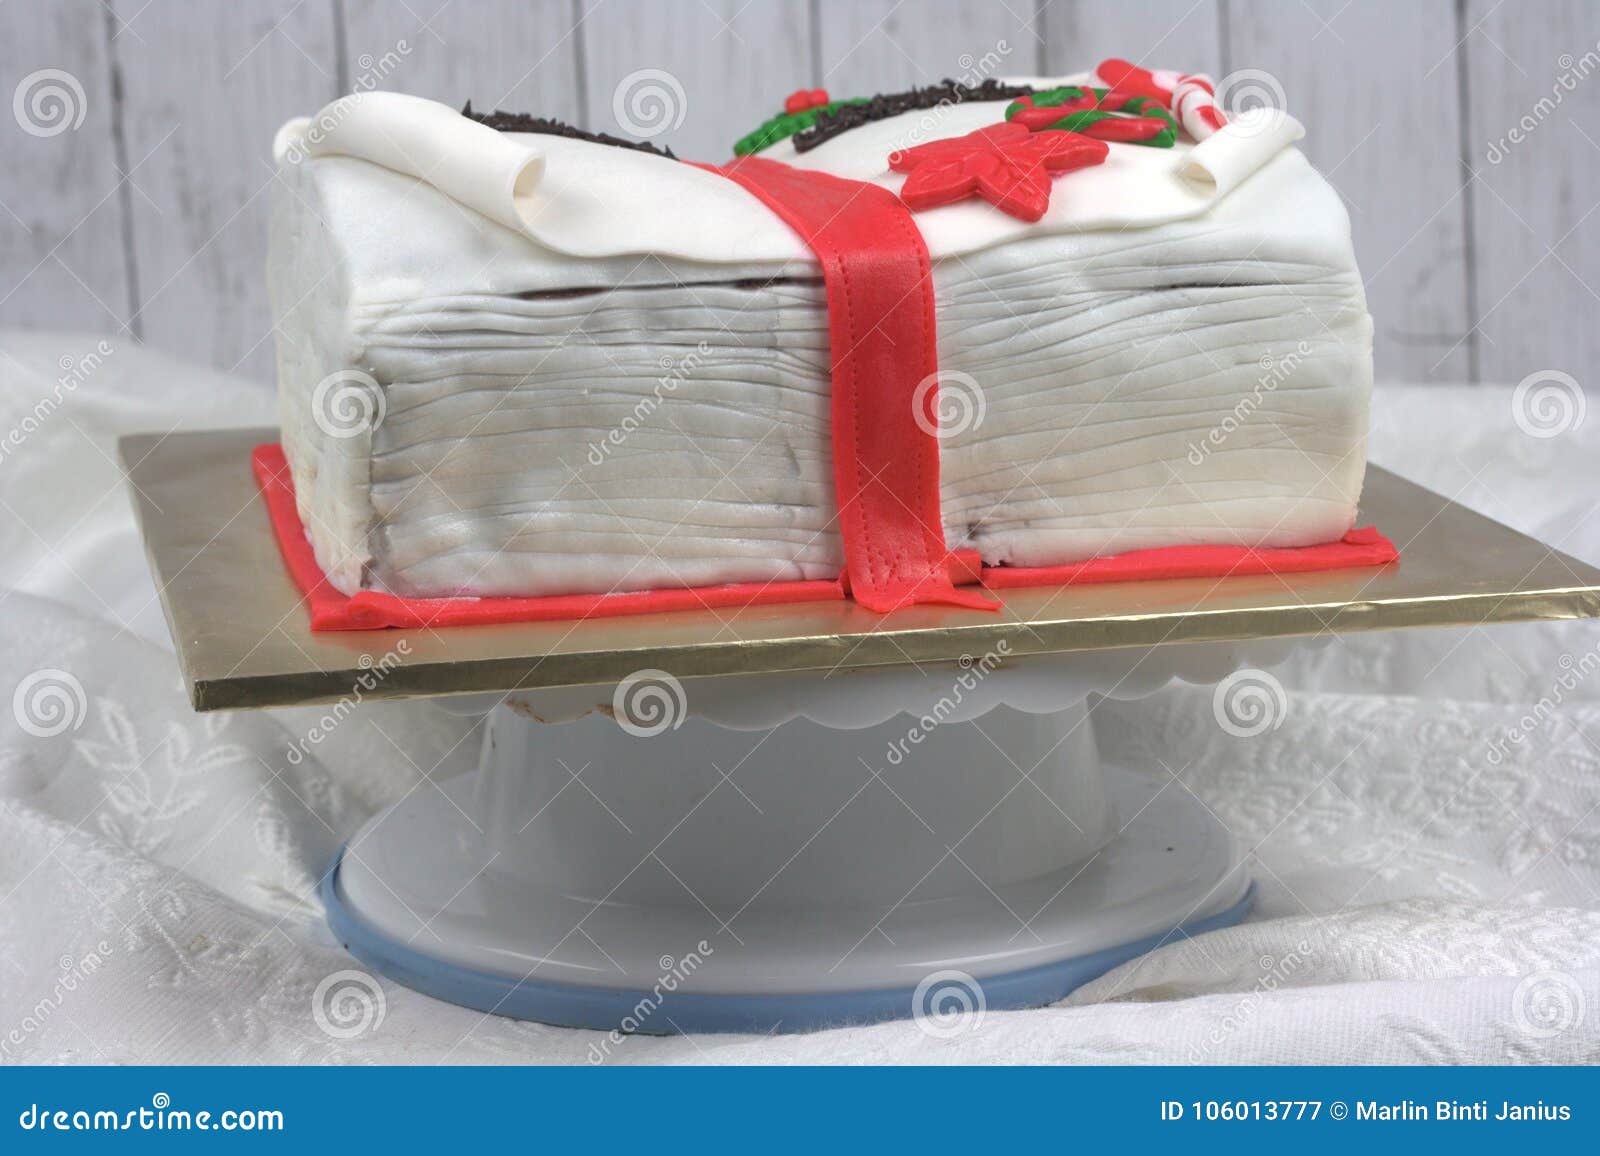 Book Shape Fondant Cake - The Cake World Shop